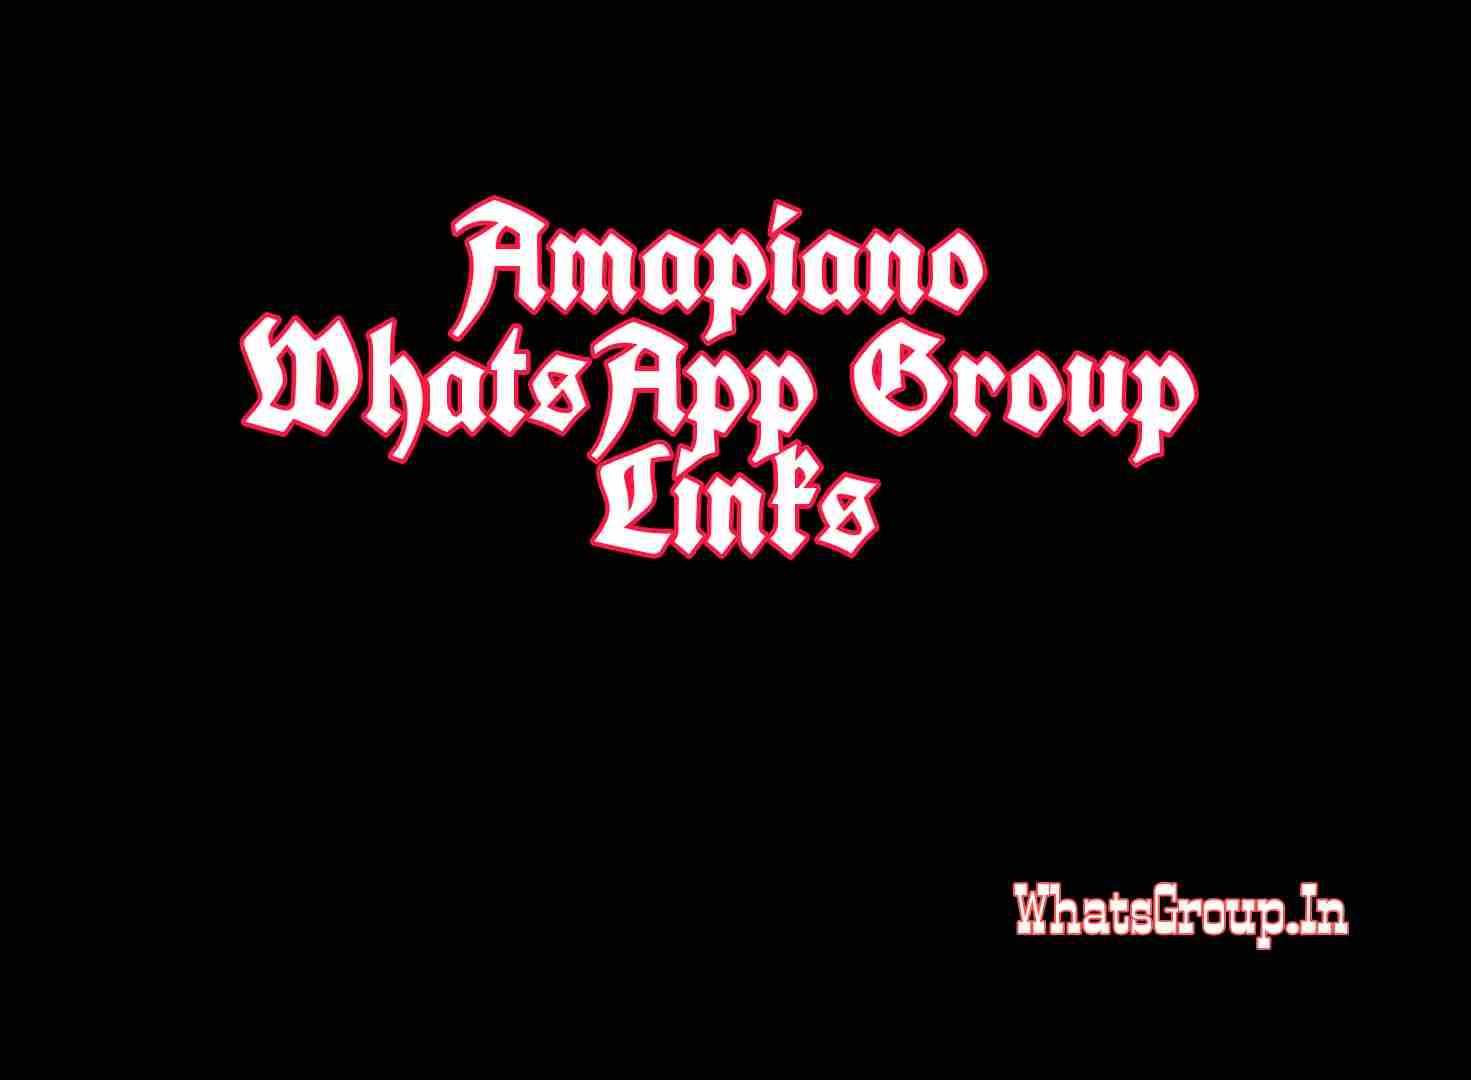 Amapiano WhatsApp Group Links